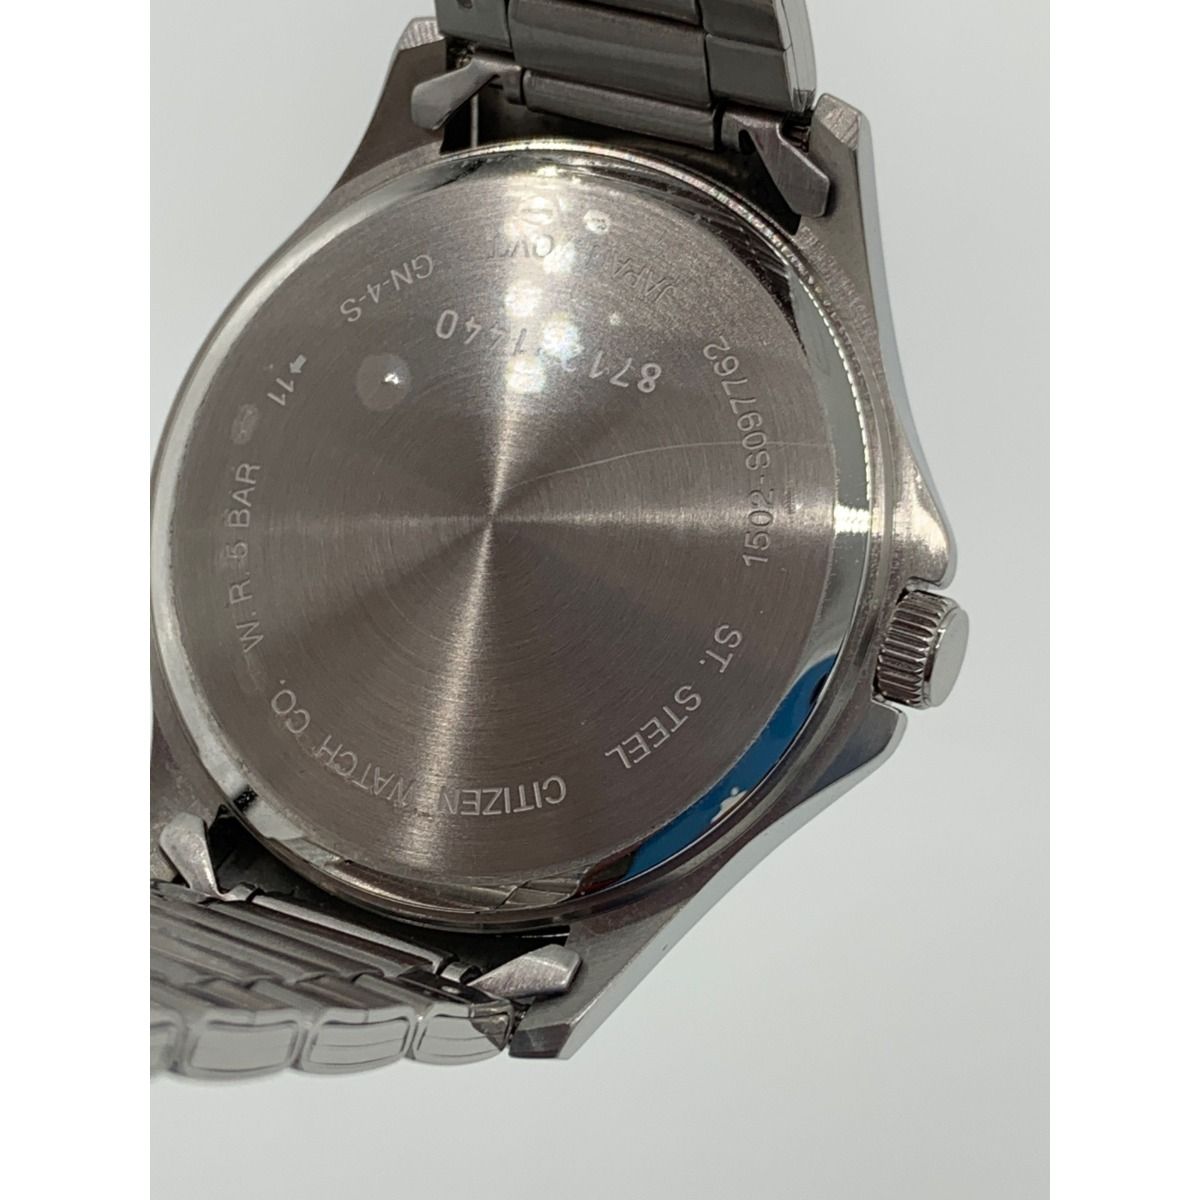 〇〇CITIZEN シチズン クォーツ 腕時計 BF-20001-55A シルバー腕時計 